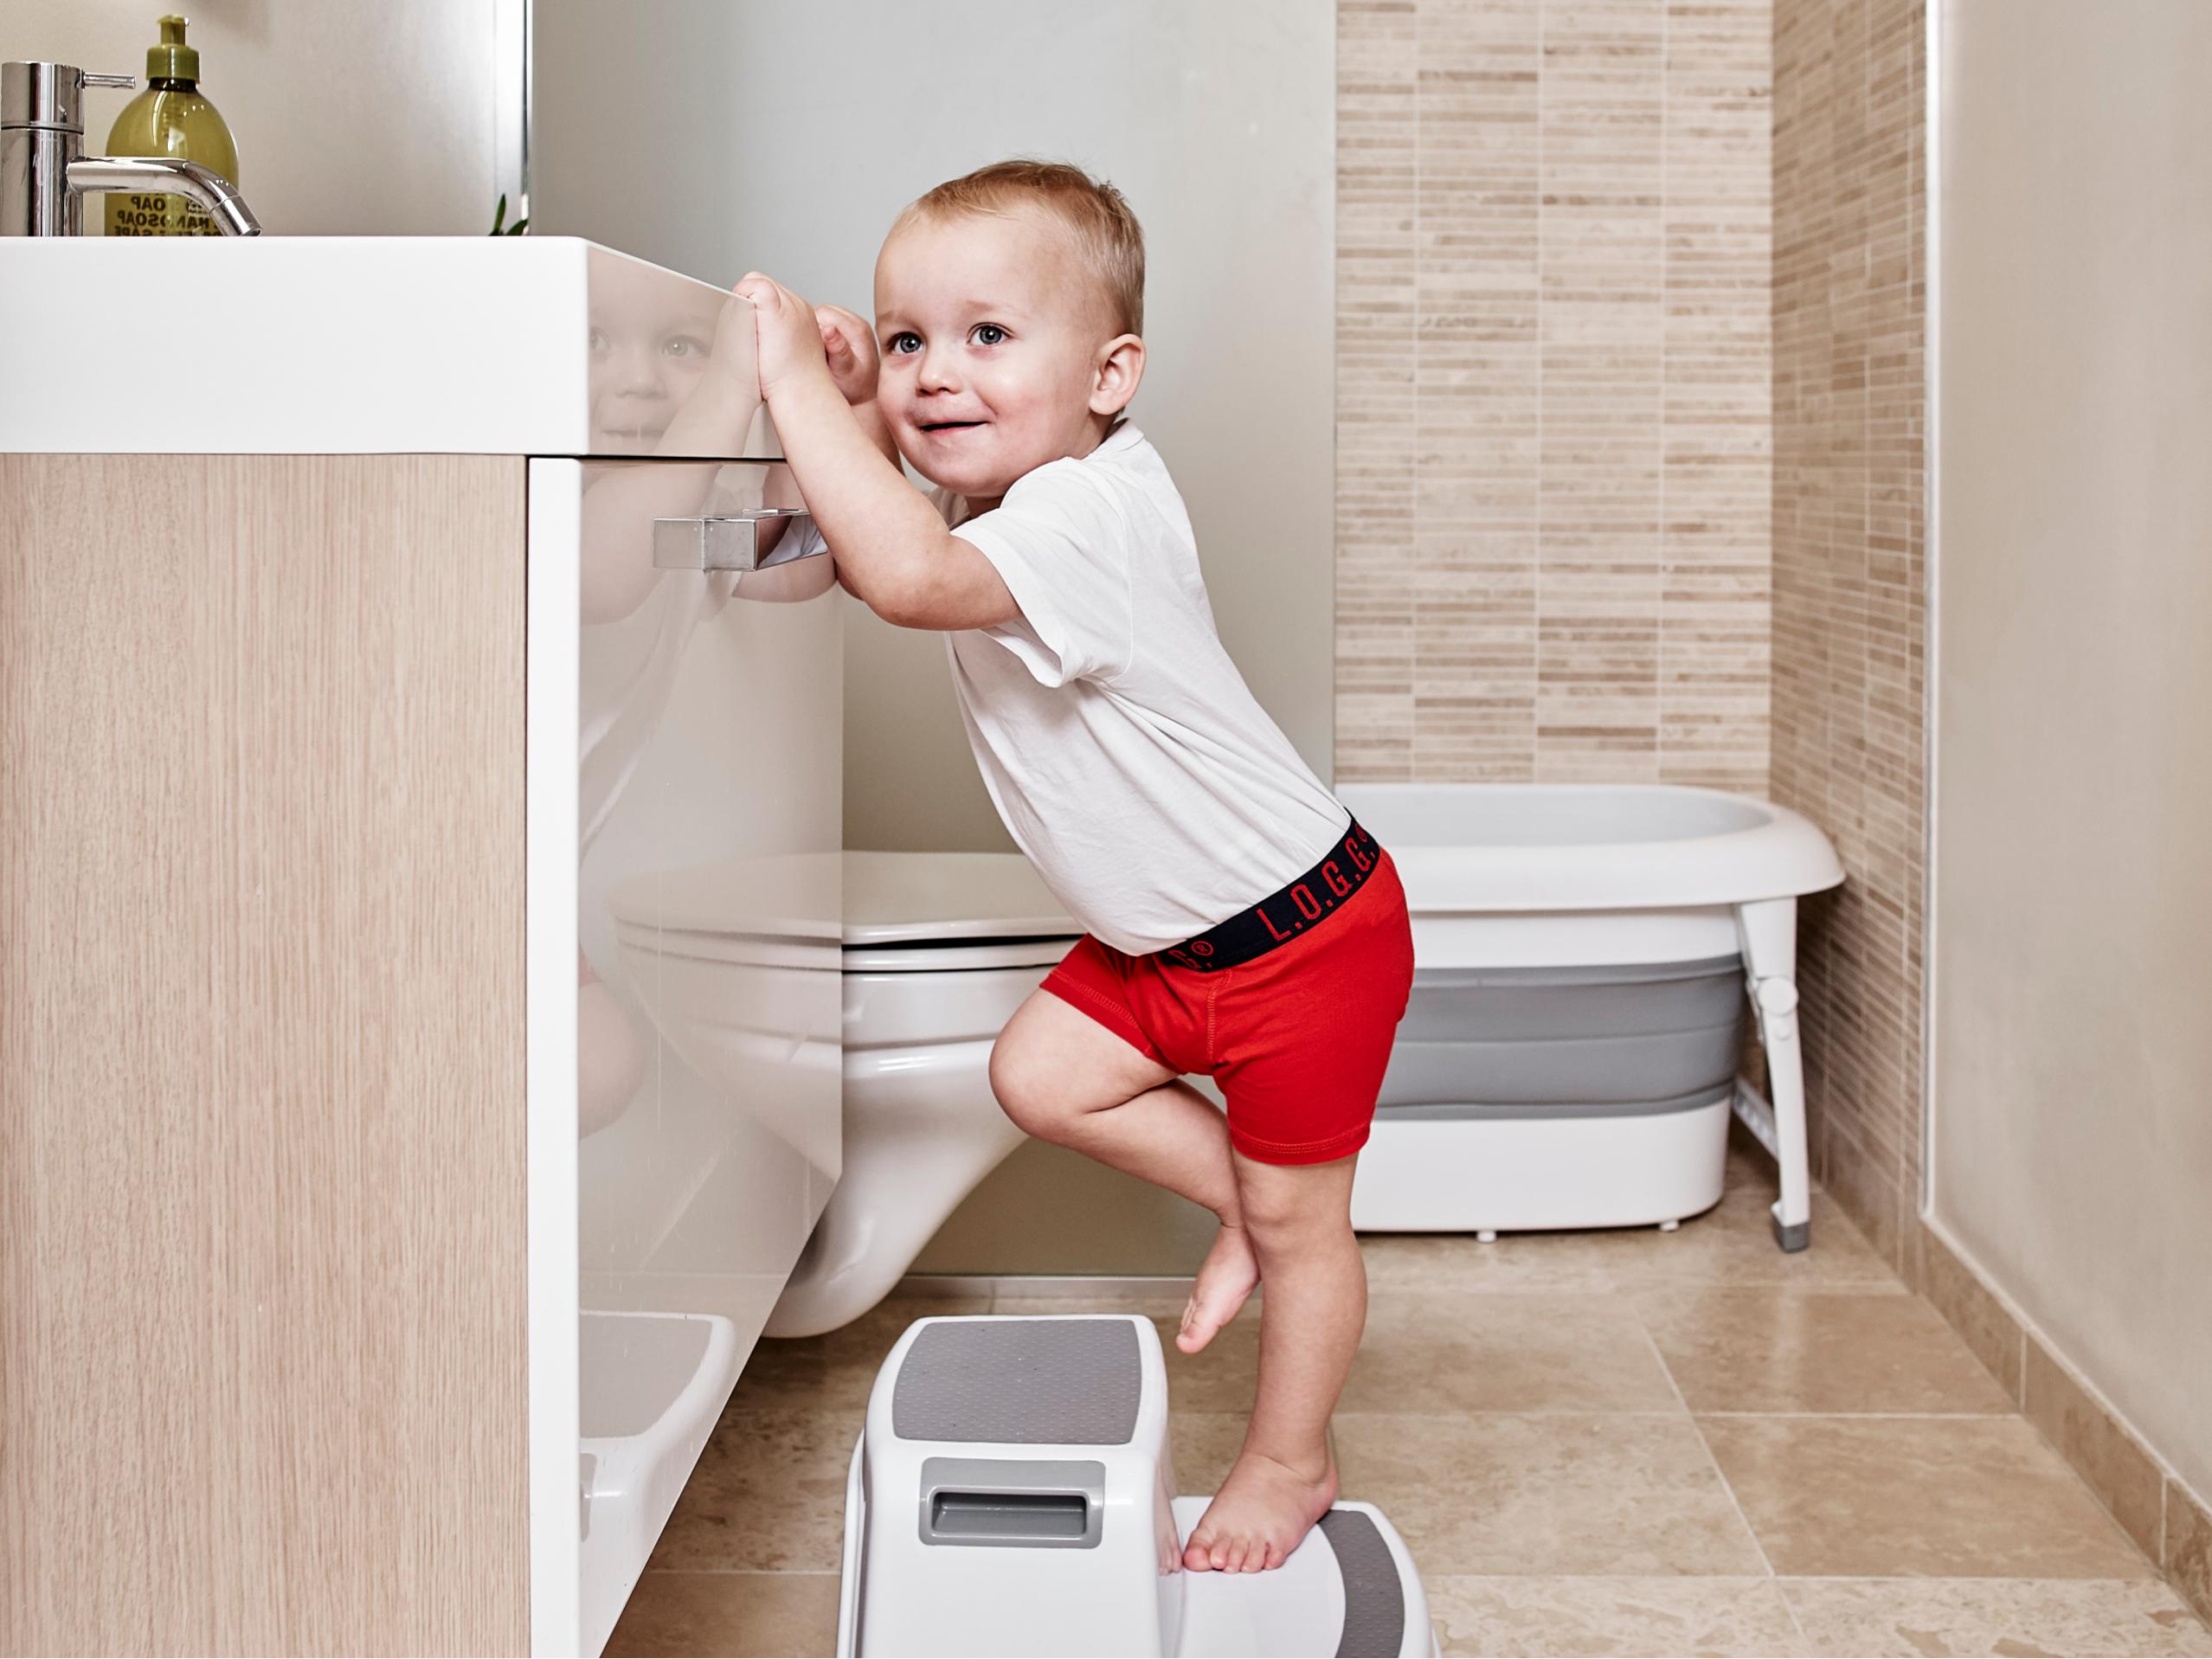 BabyDan Child Kitchen Safety Cabinet and Fridge Lock - How To Use